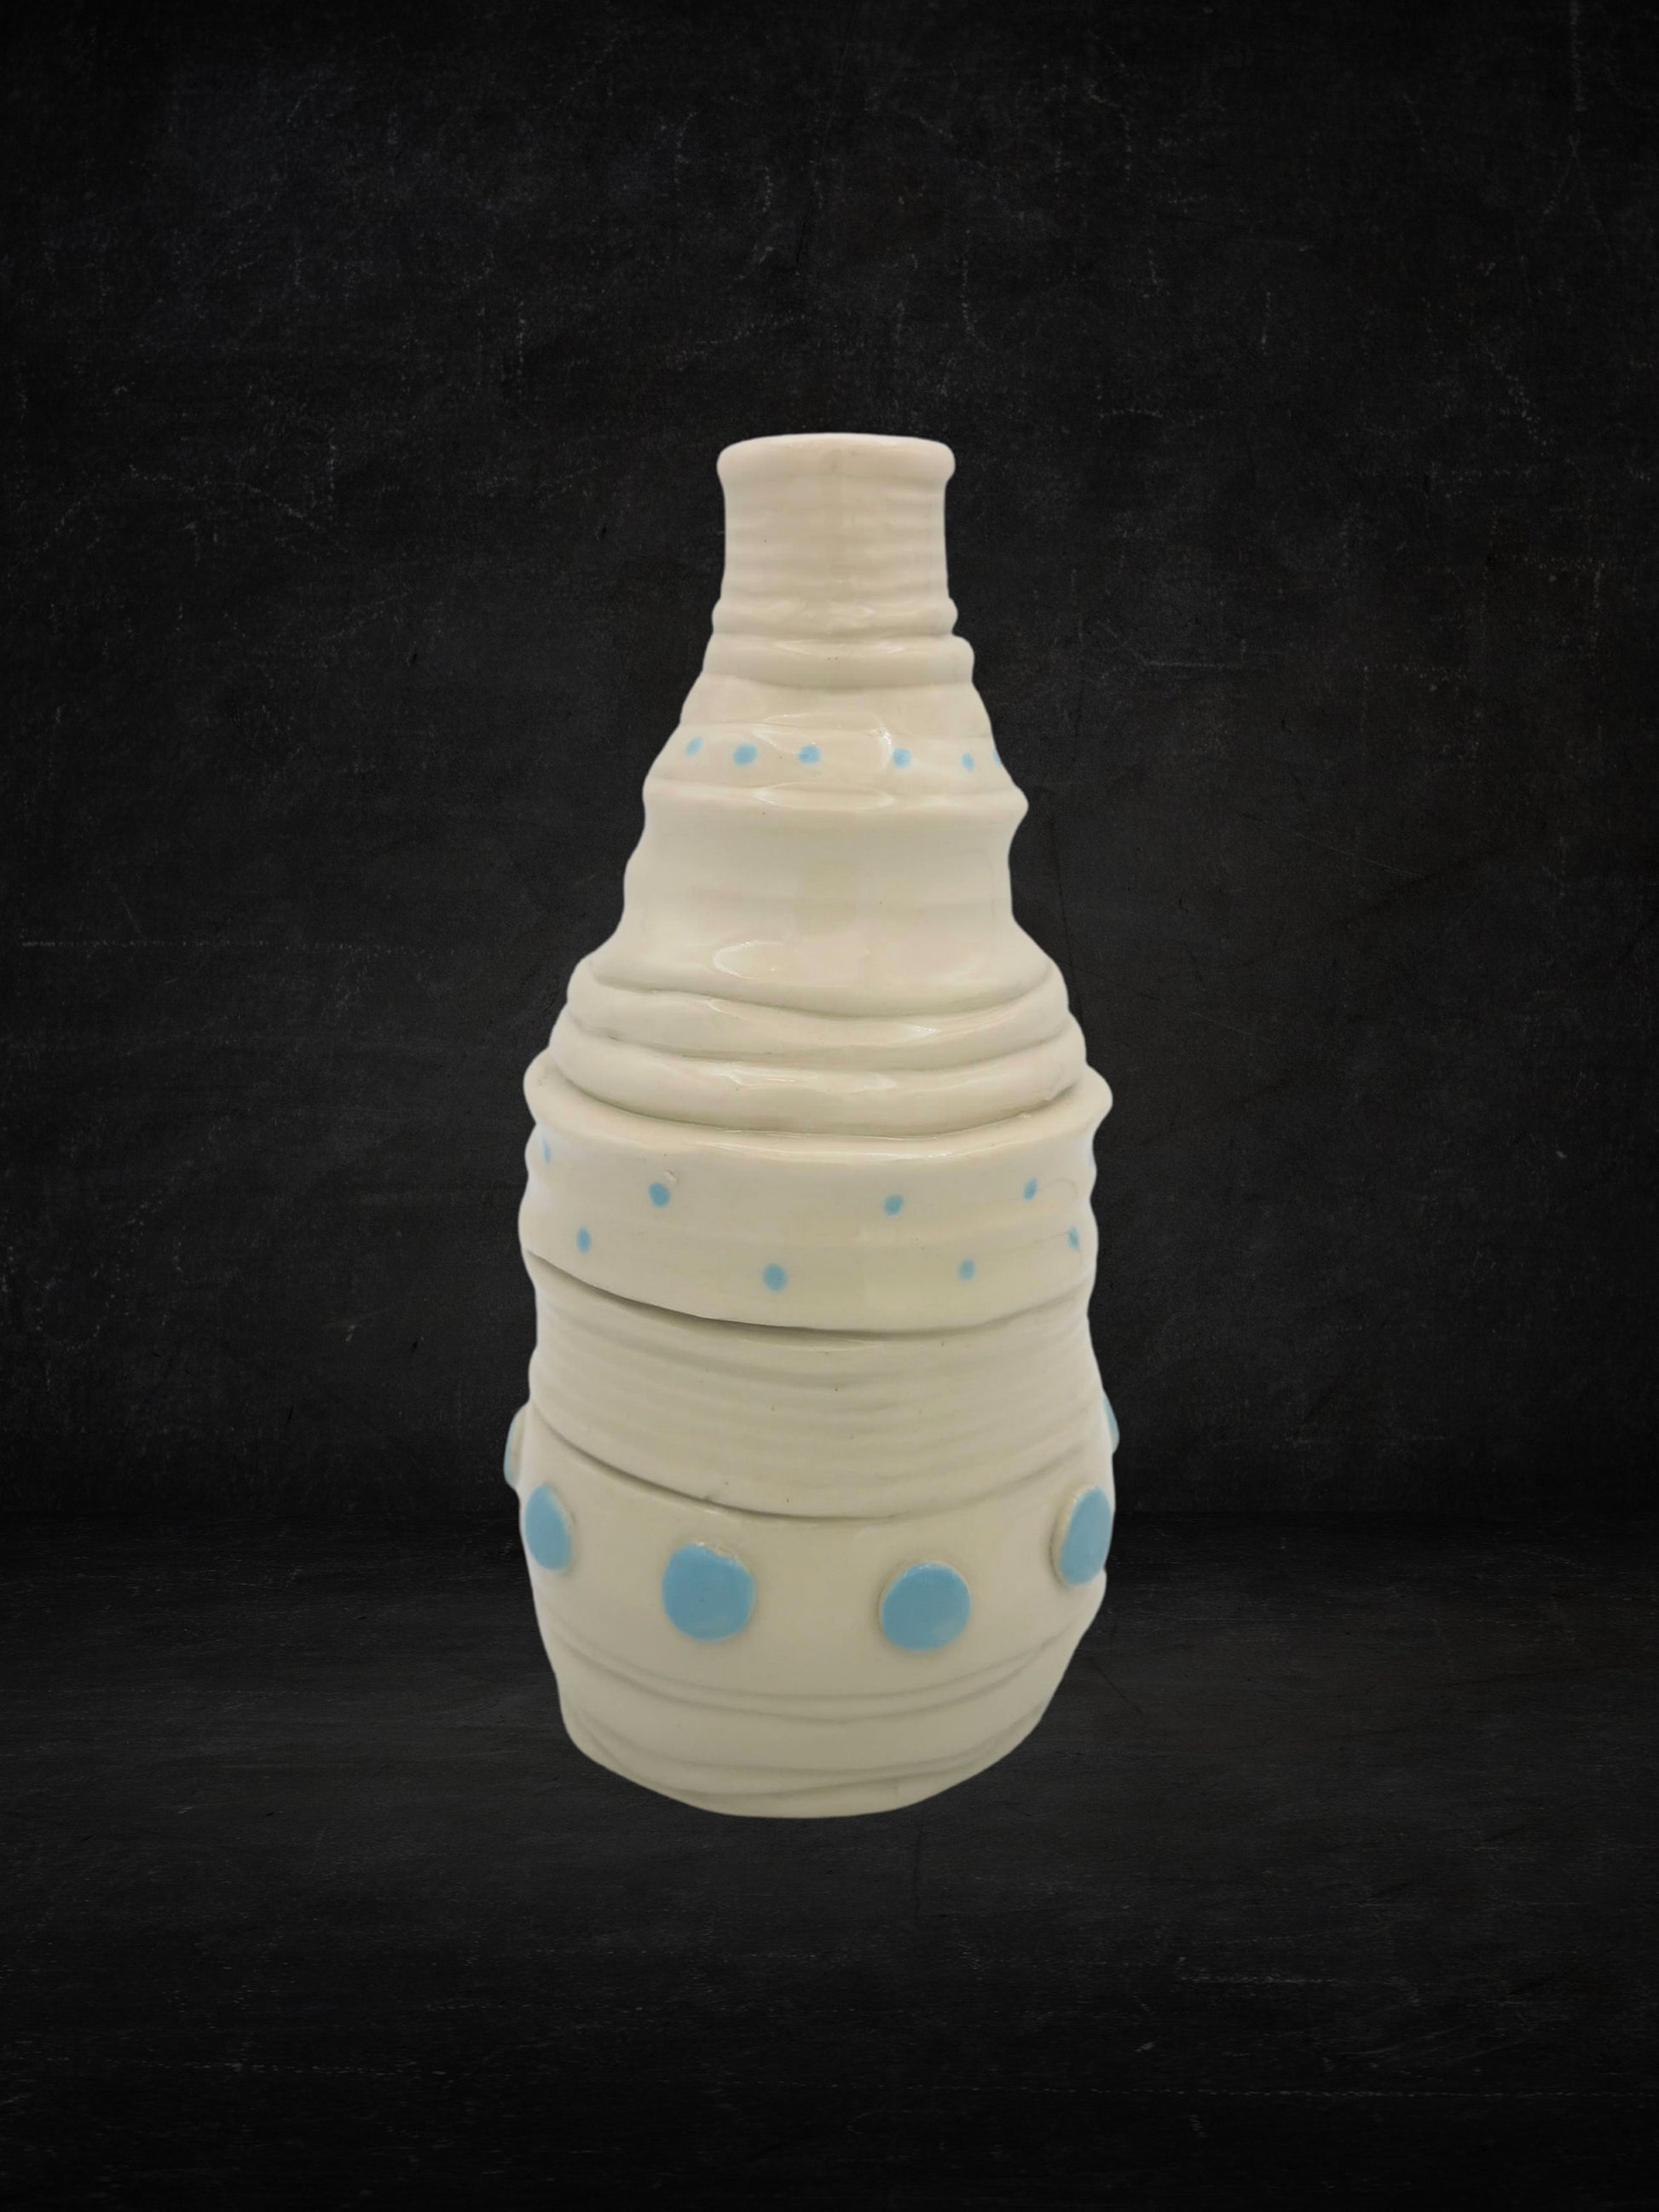 Irregular Handmade Ceramic Vase For Flowers, Textured Decorative Handbuilt Stoneware Sculptural Bottle For Home Decor With Rustic Look - Ceramica Ana Rafael